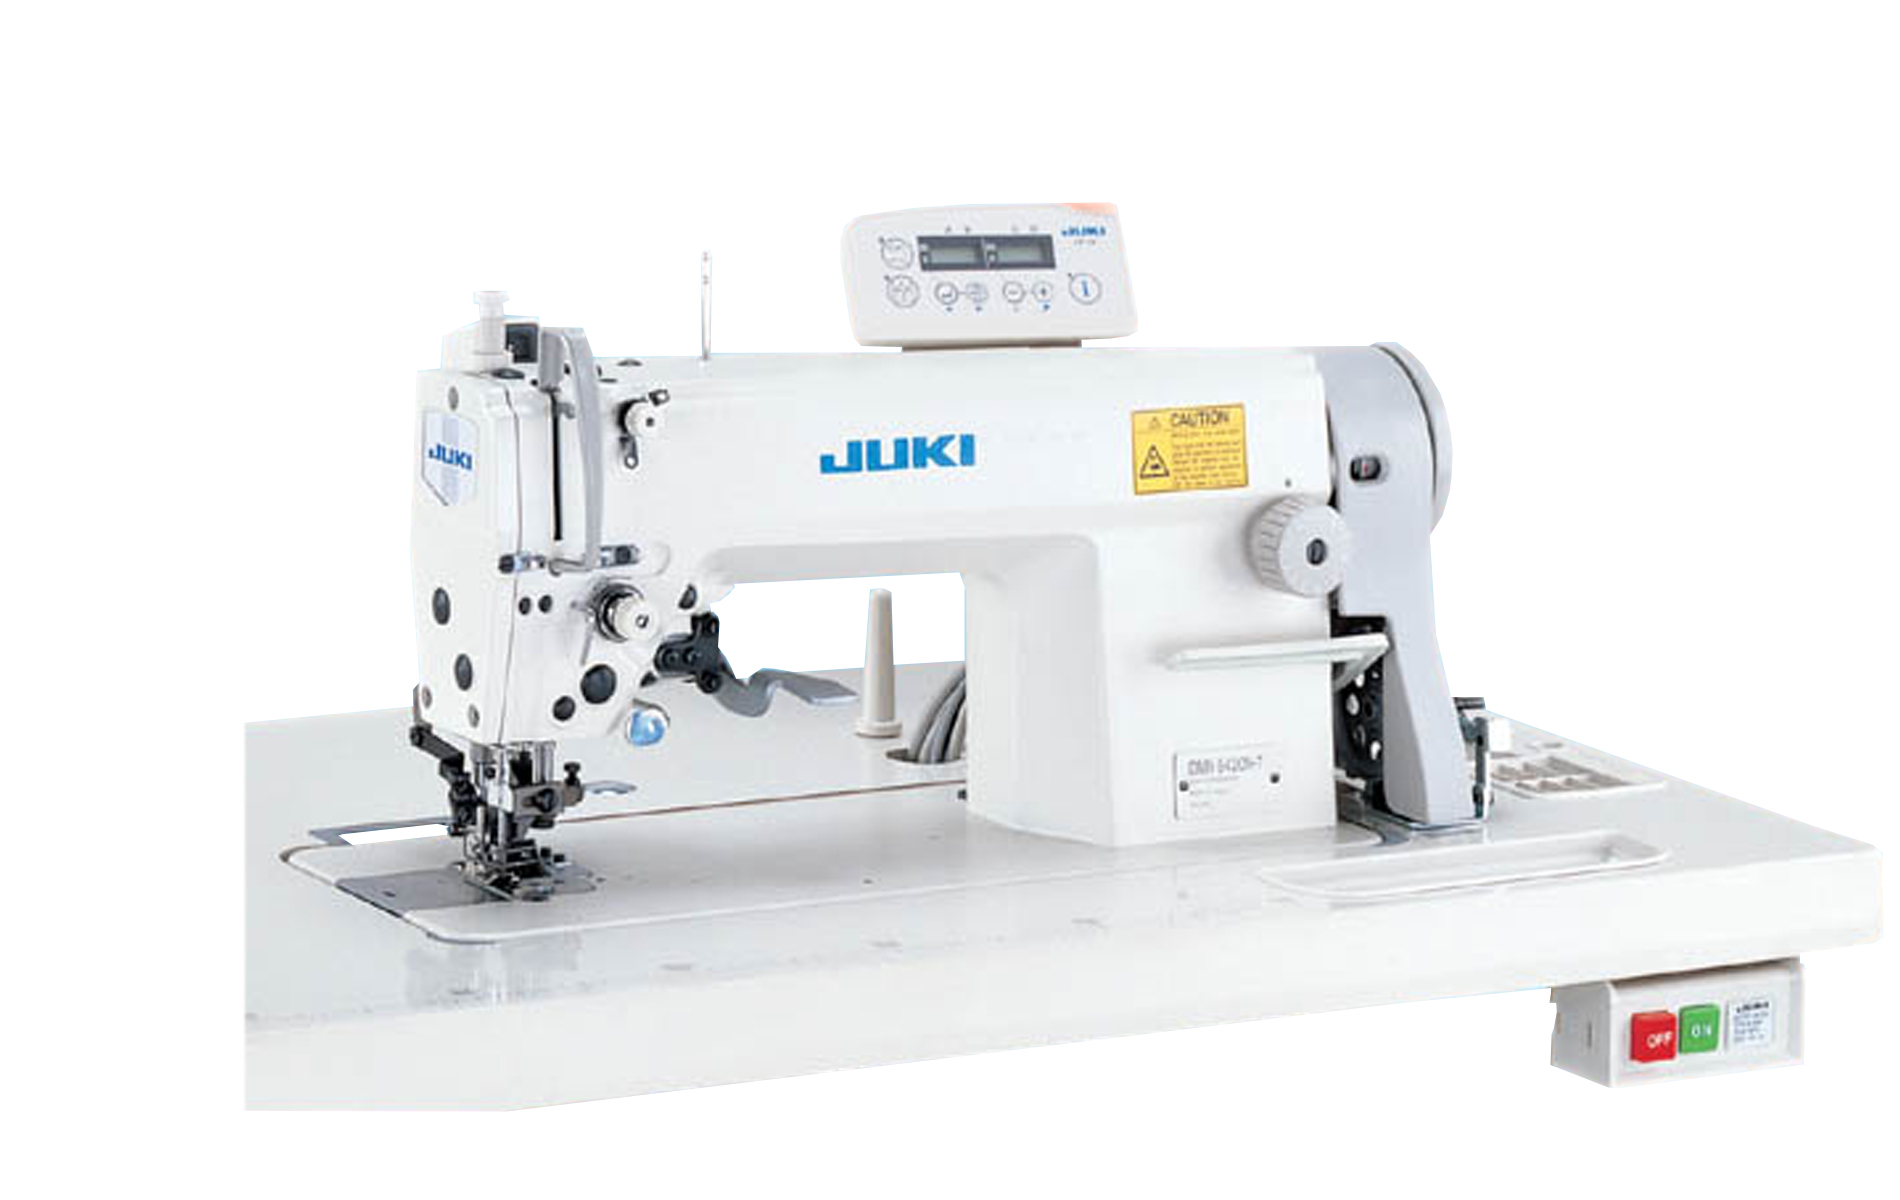 Промышленная швейная машинка juki. Juki DLN-5410n. Juki DMN-5420nfa-7-WB/AK-85. Машина швейная DLN-5410n Juki. Промышленная швейная машина Juki DLD-5430n.